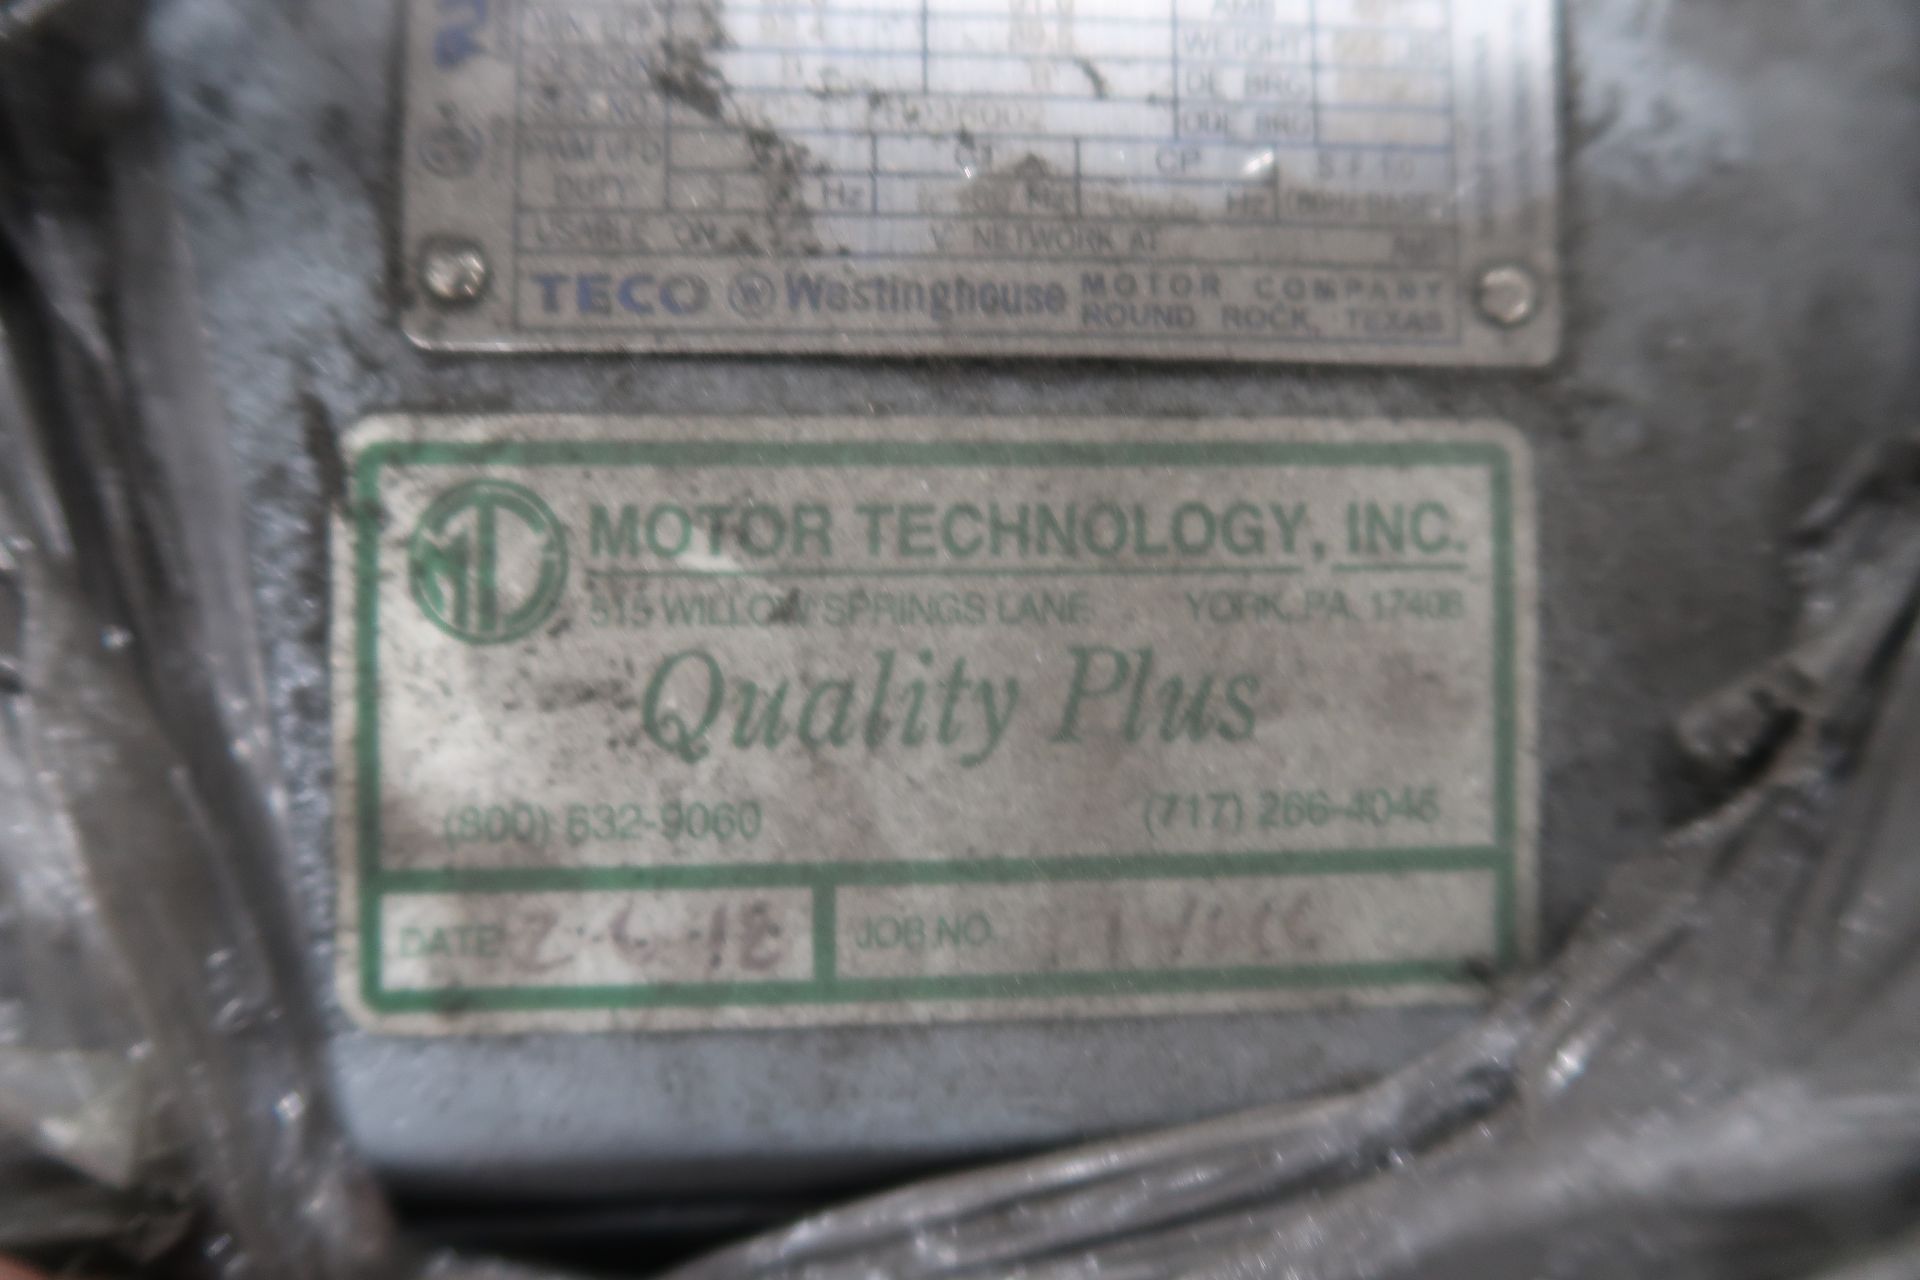 Teco Westinghouse motor - Image 2 of 3